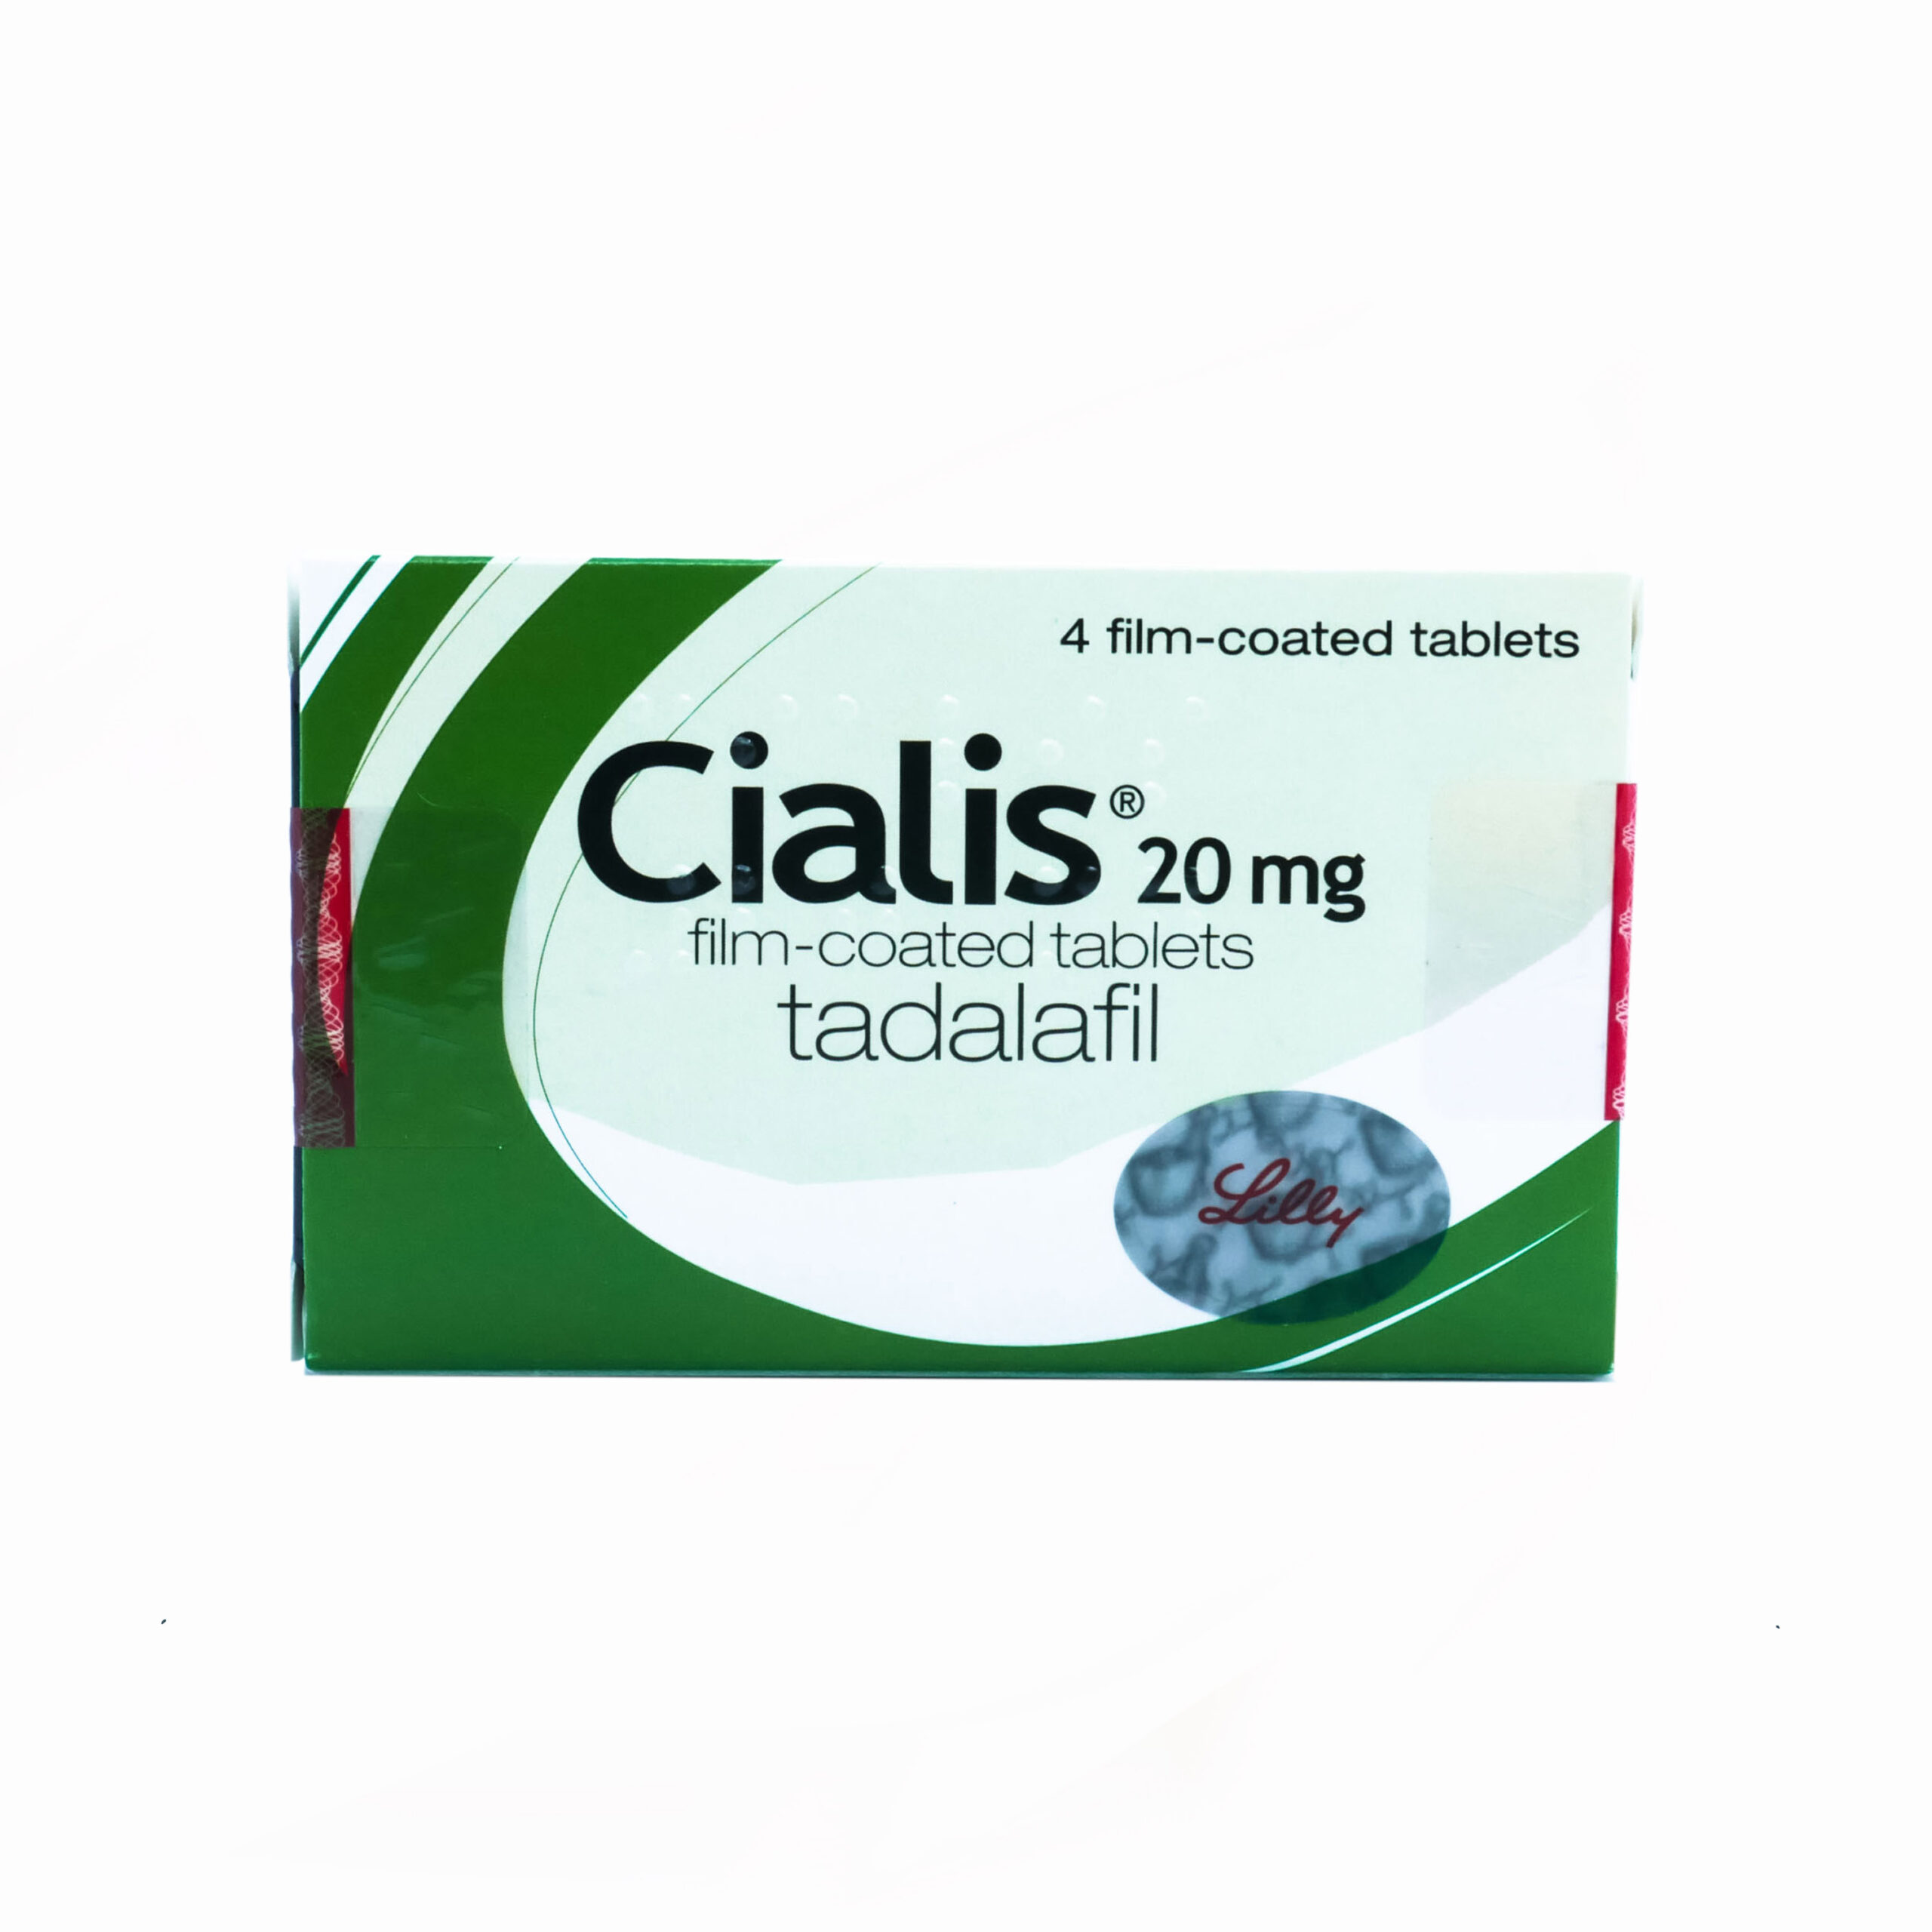 Cialis - Tadalafil - 20mg tablets